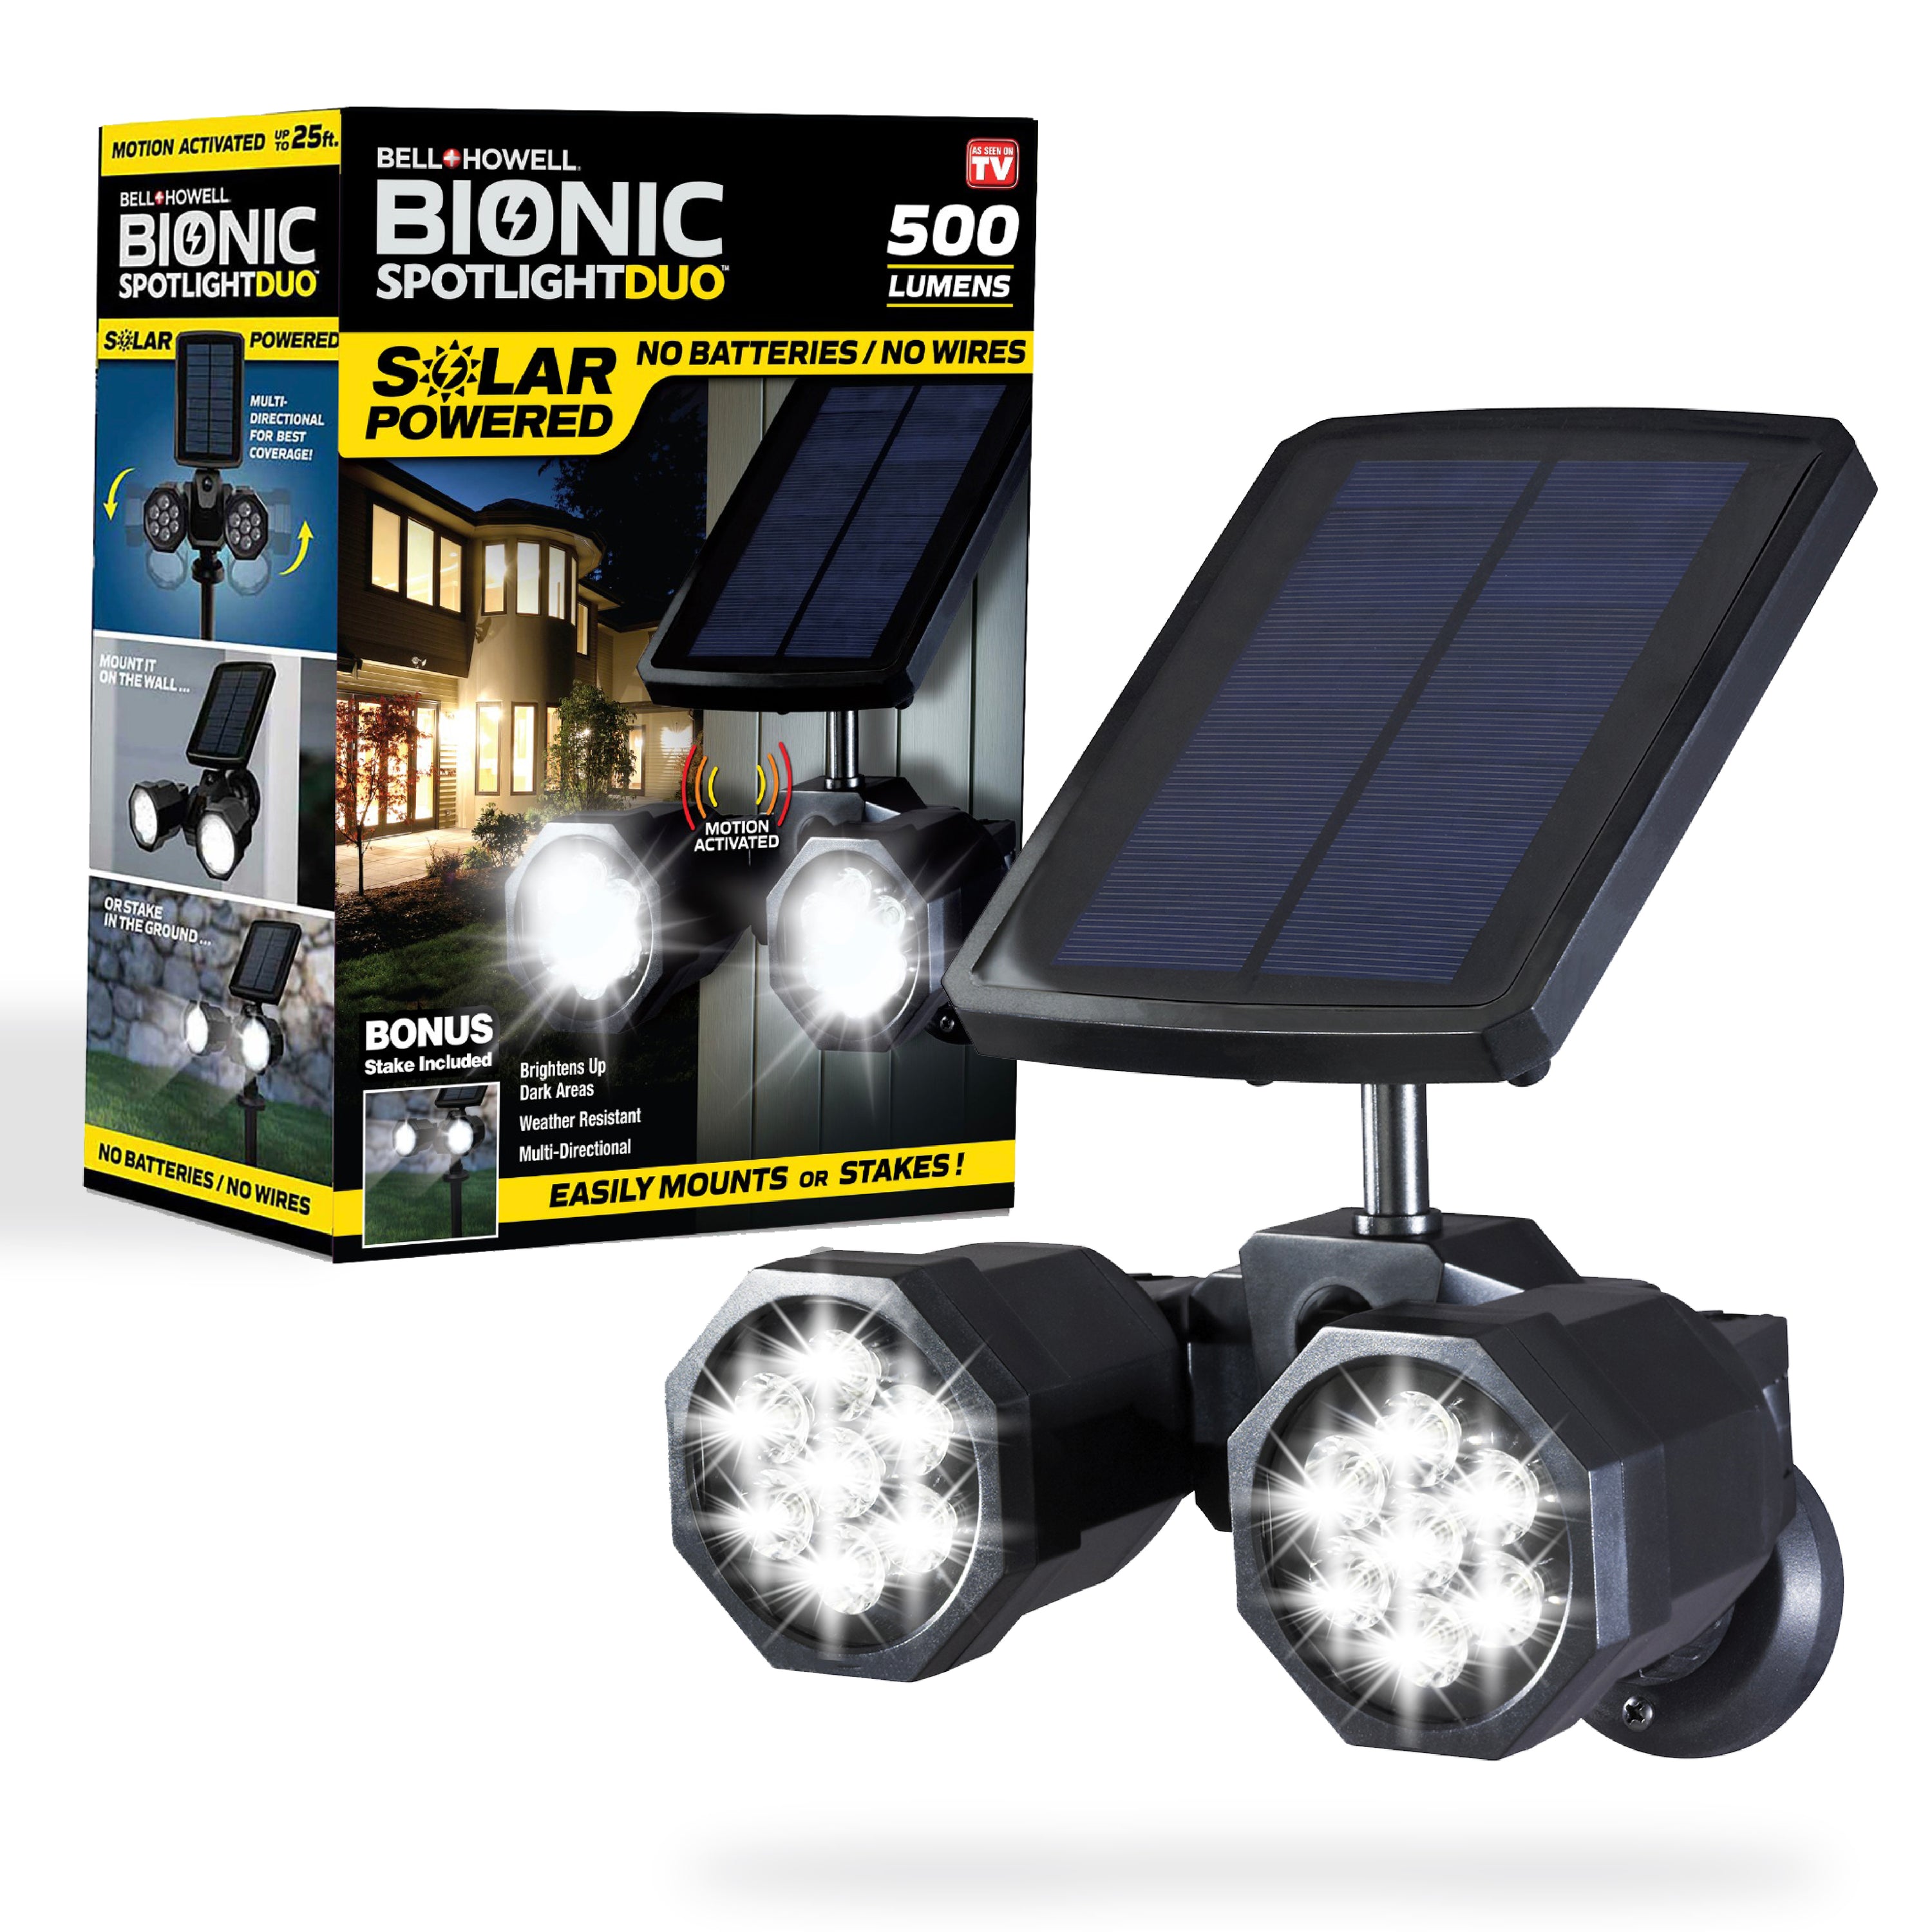 Bionic Spotlight Duo Solar Powered Spotlight